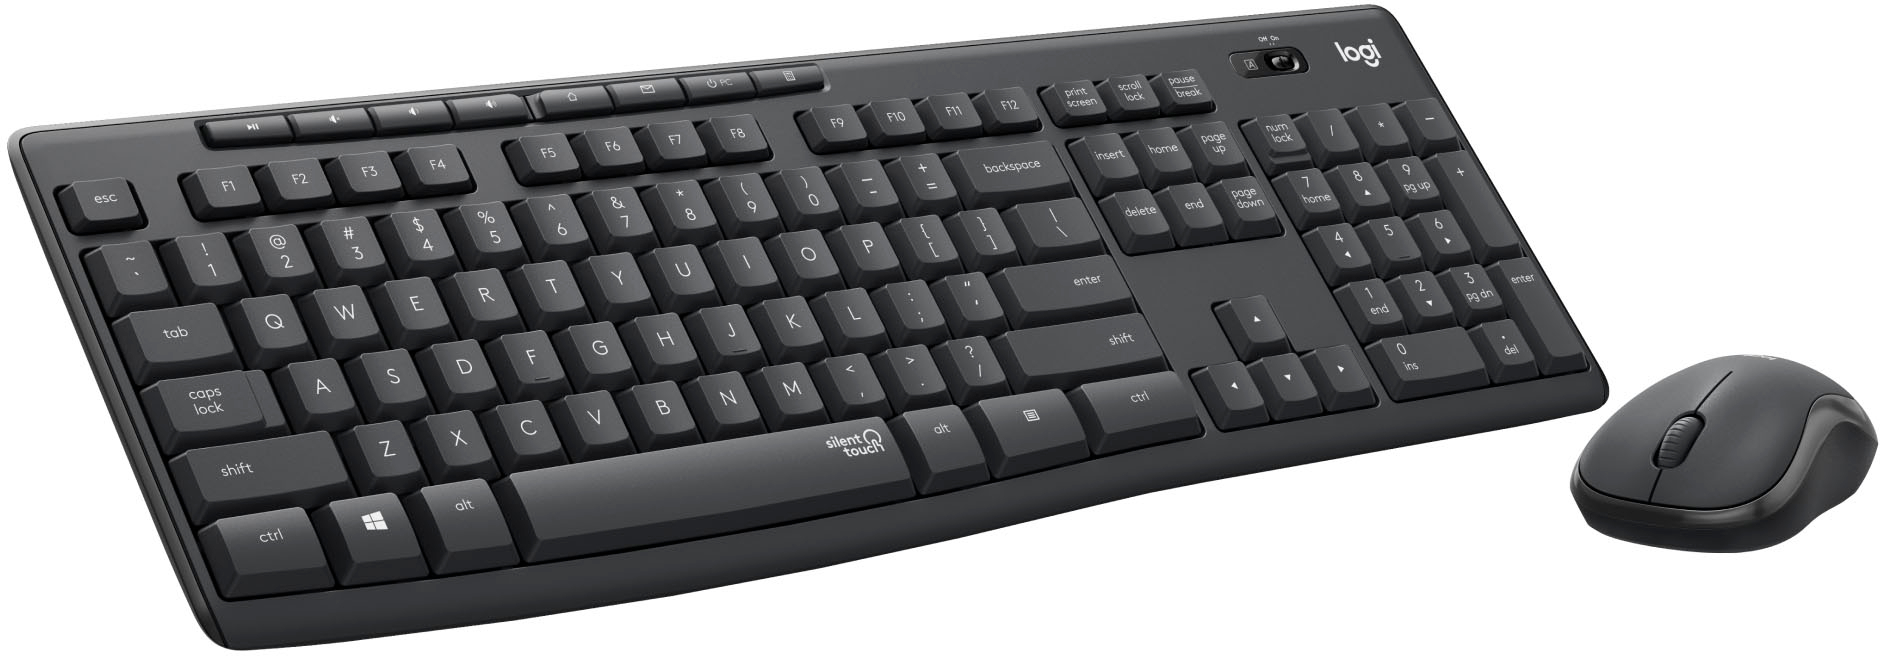 Logitech MK850 Performance Full-size Wireless Keyboard and Mouse